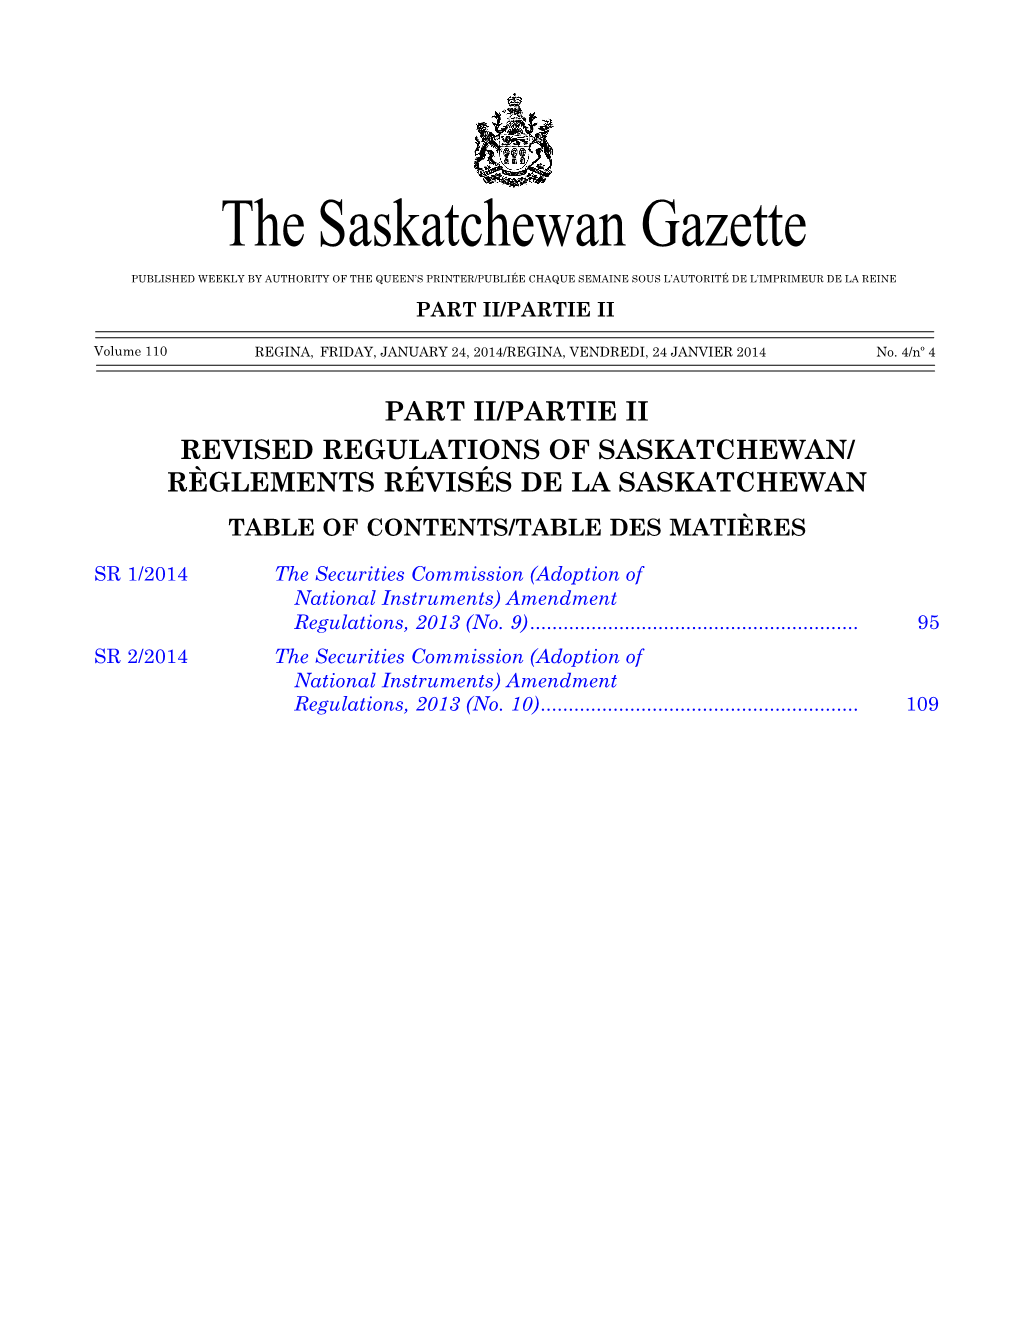 THE SASKATCHEWAN GAZETTE, JANUARY 24, 2014 93 the Saskatchewan Gazette